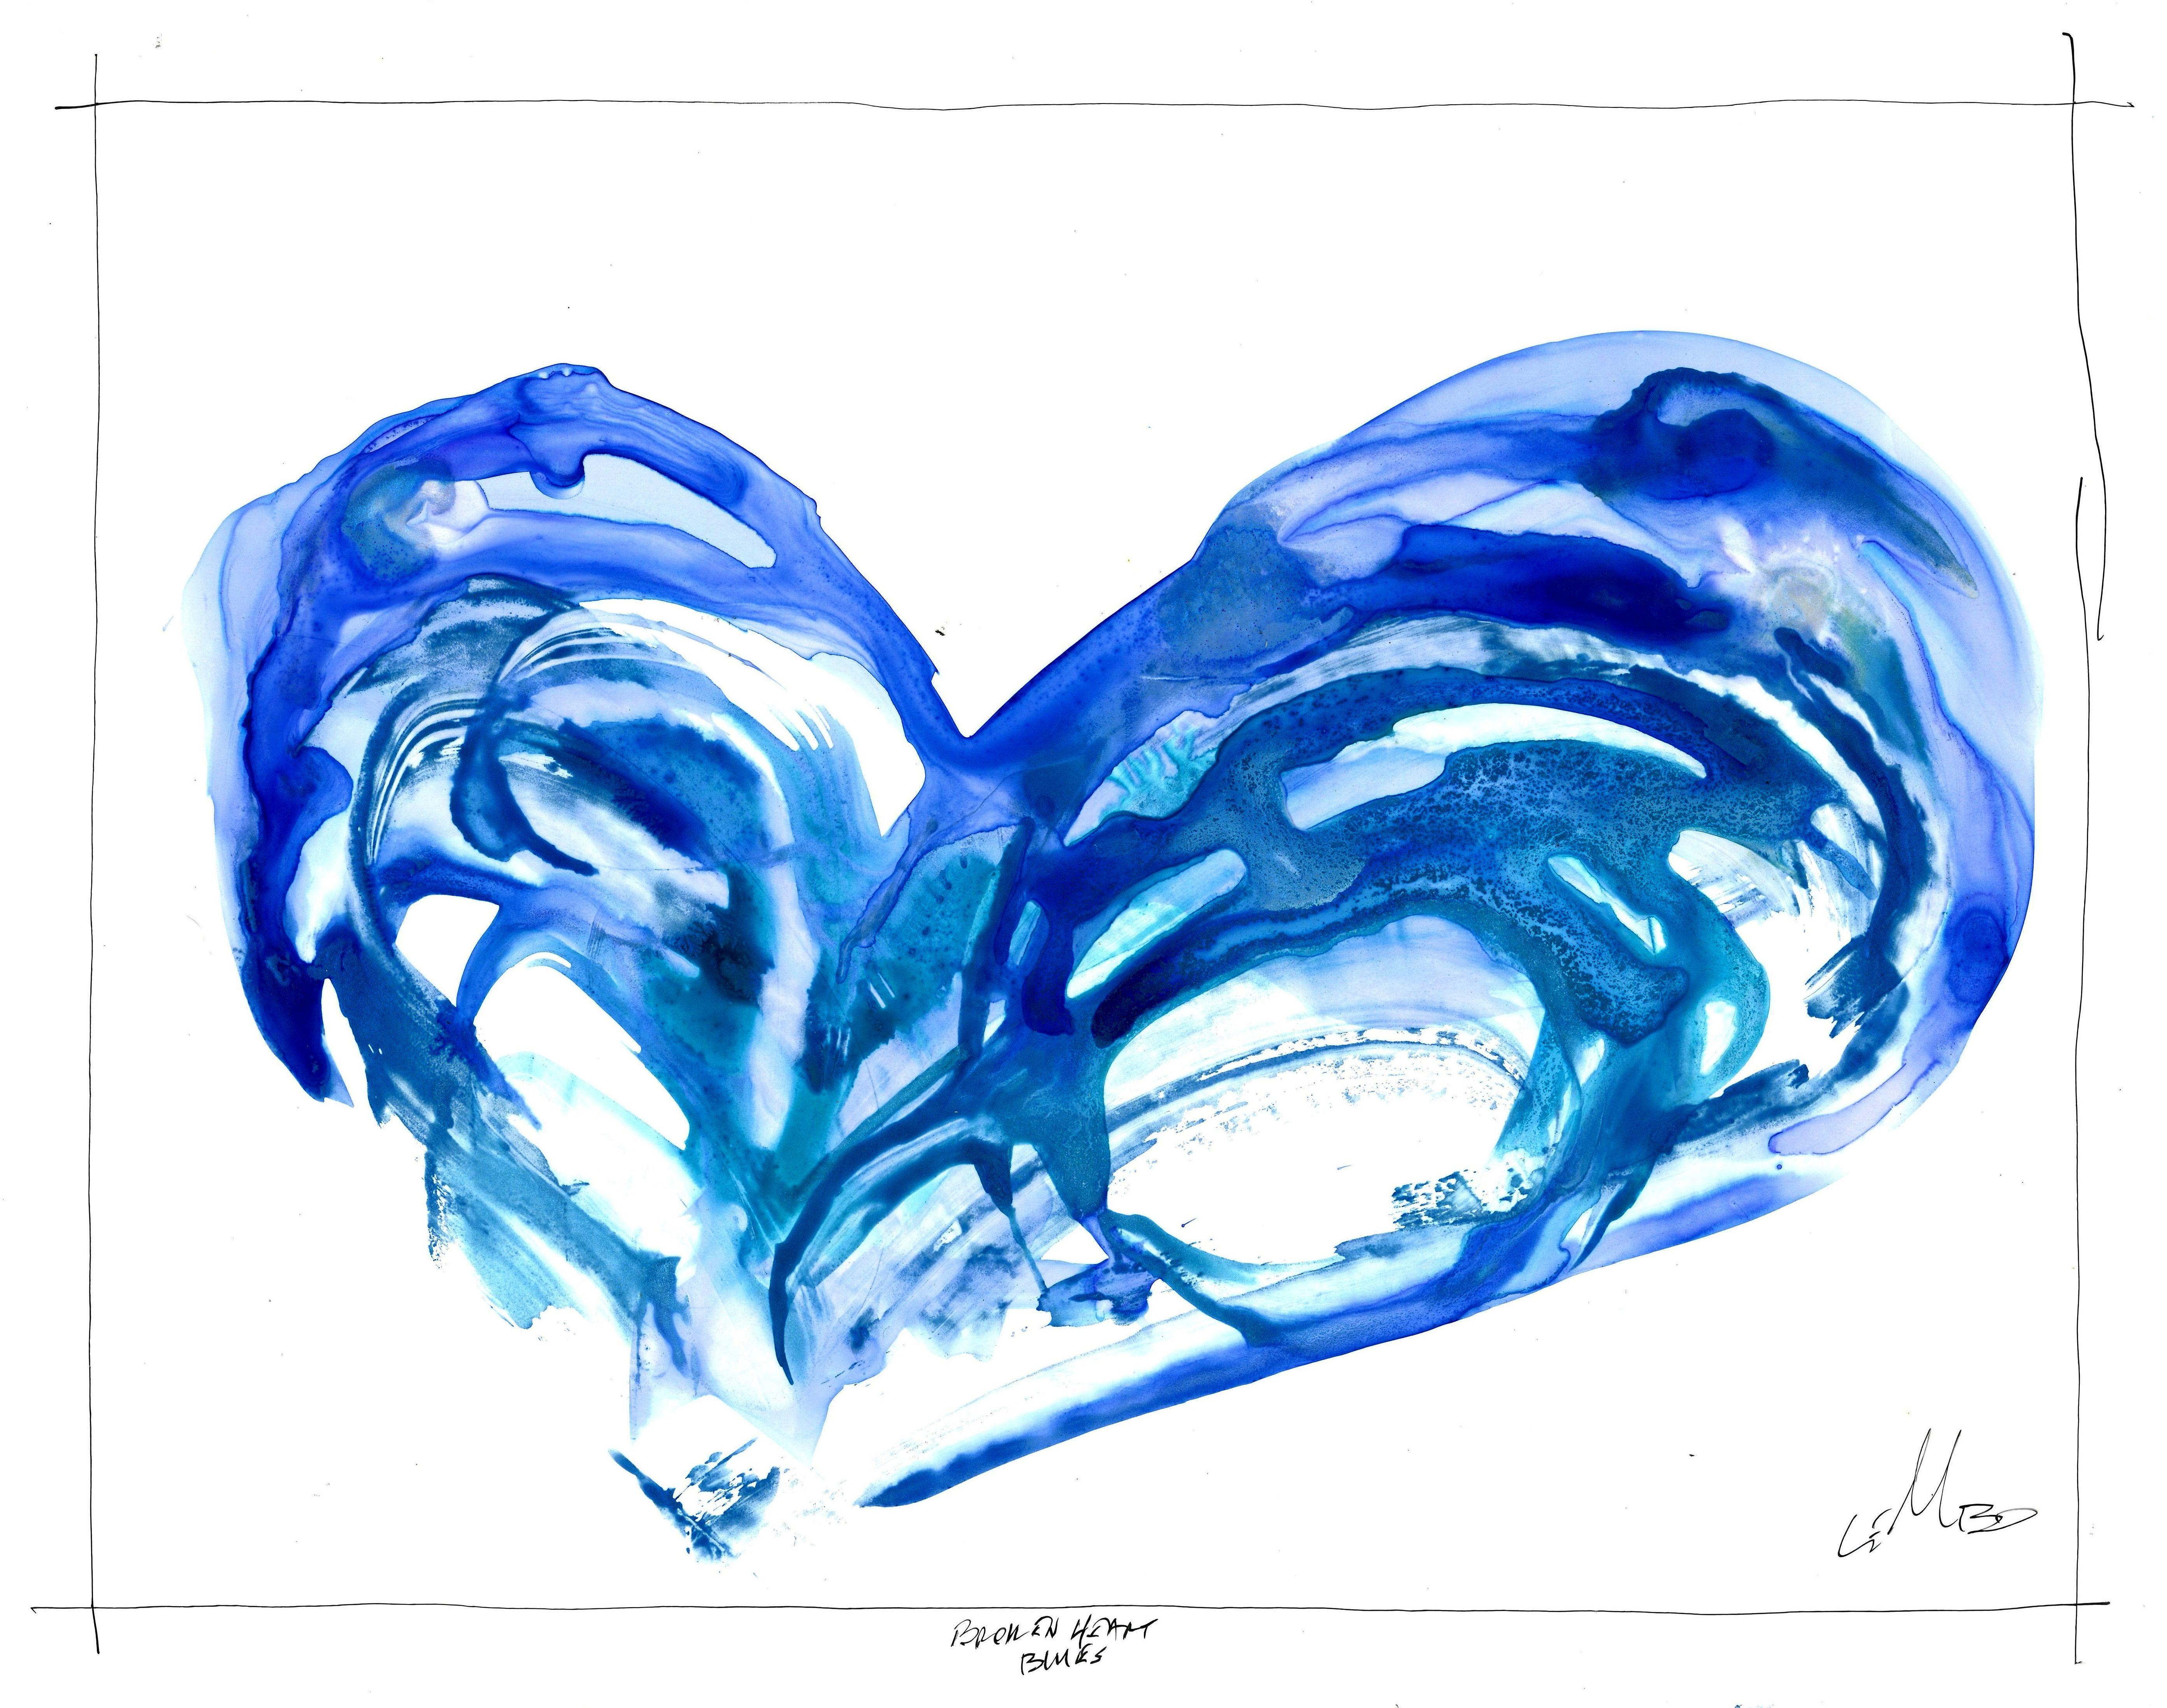 Bleus du cœur brossé - Mixed Media Art de Mark Lembo